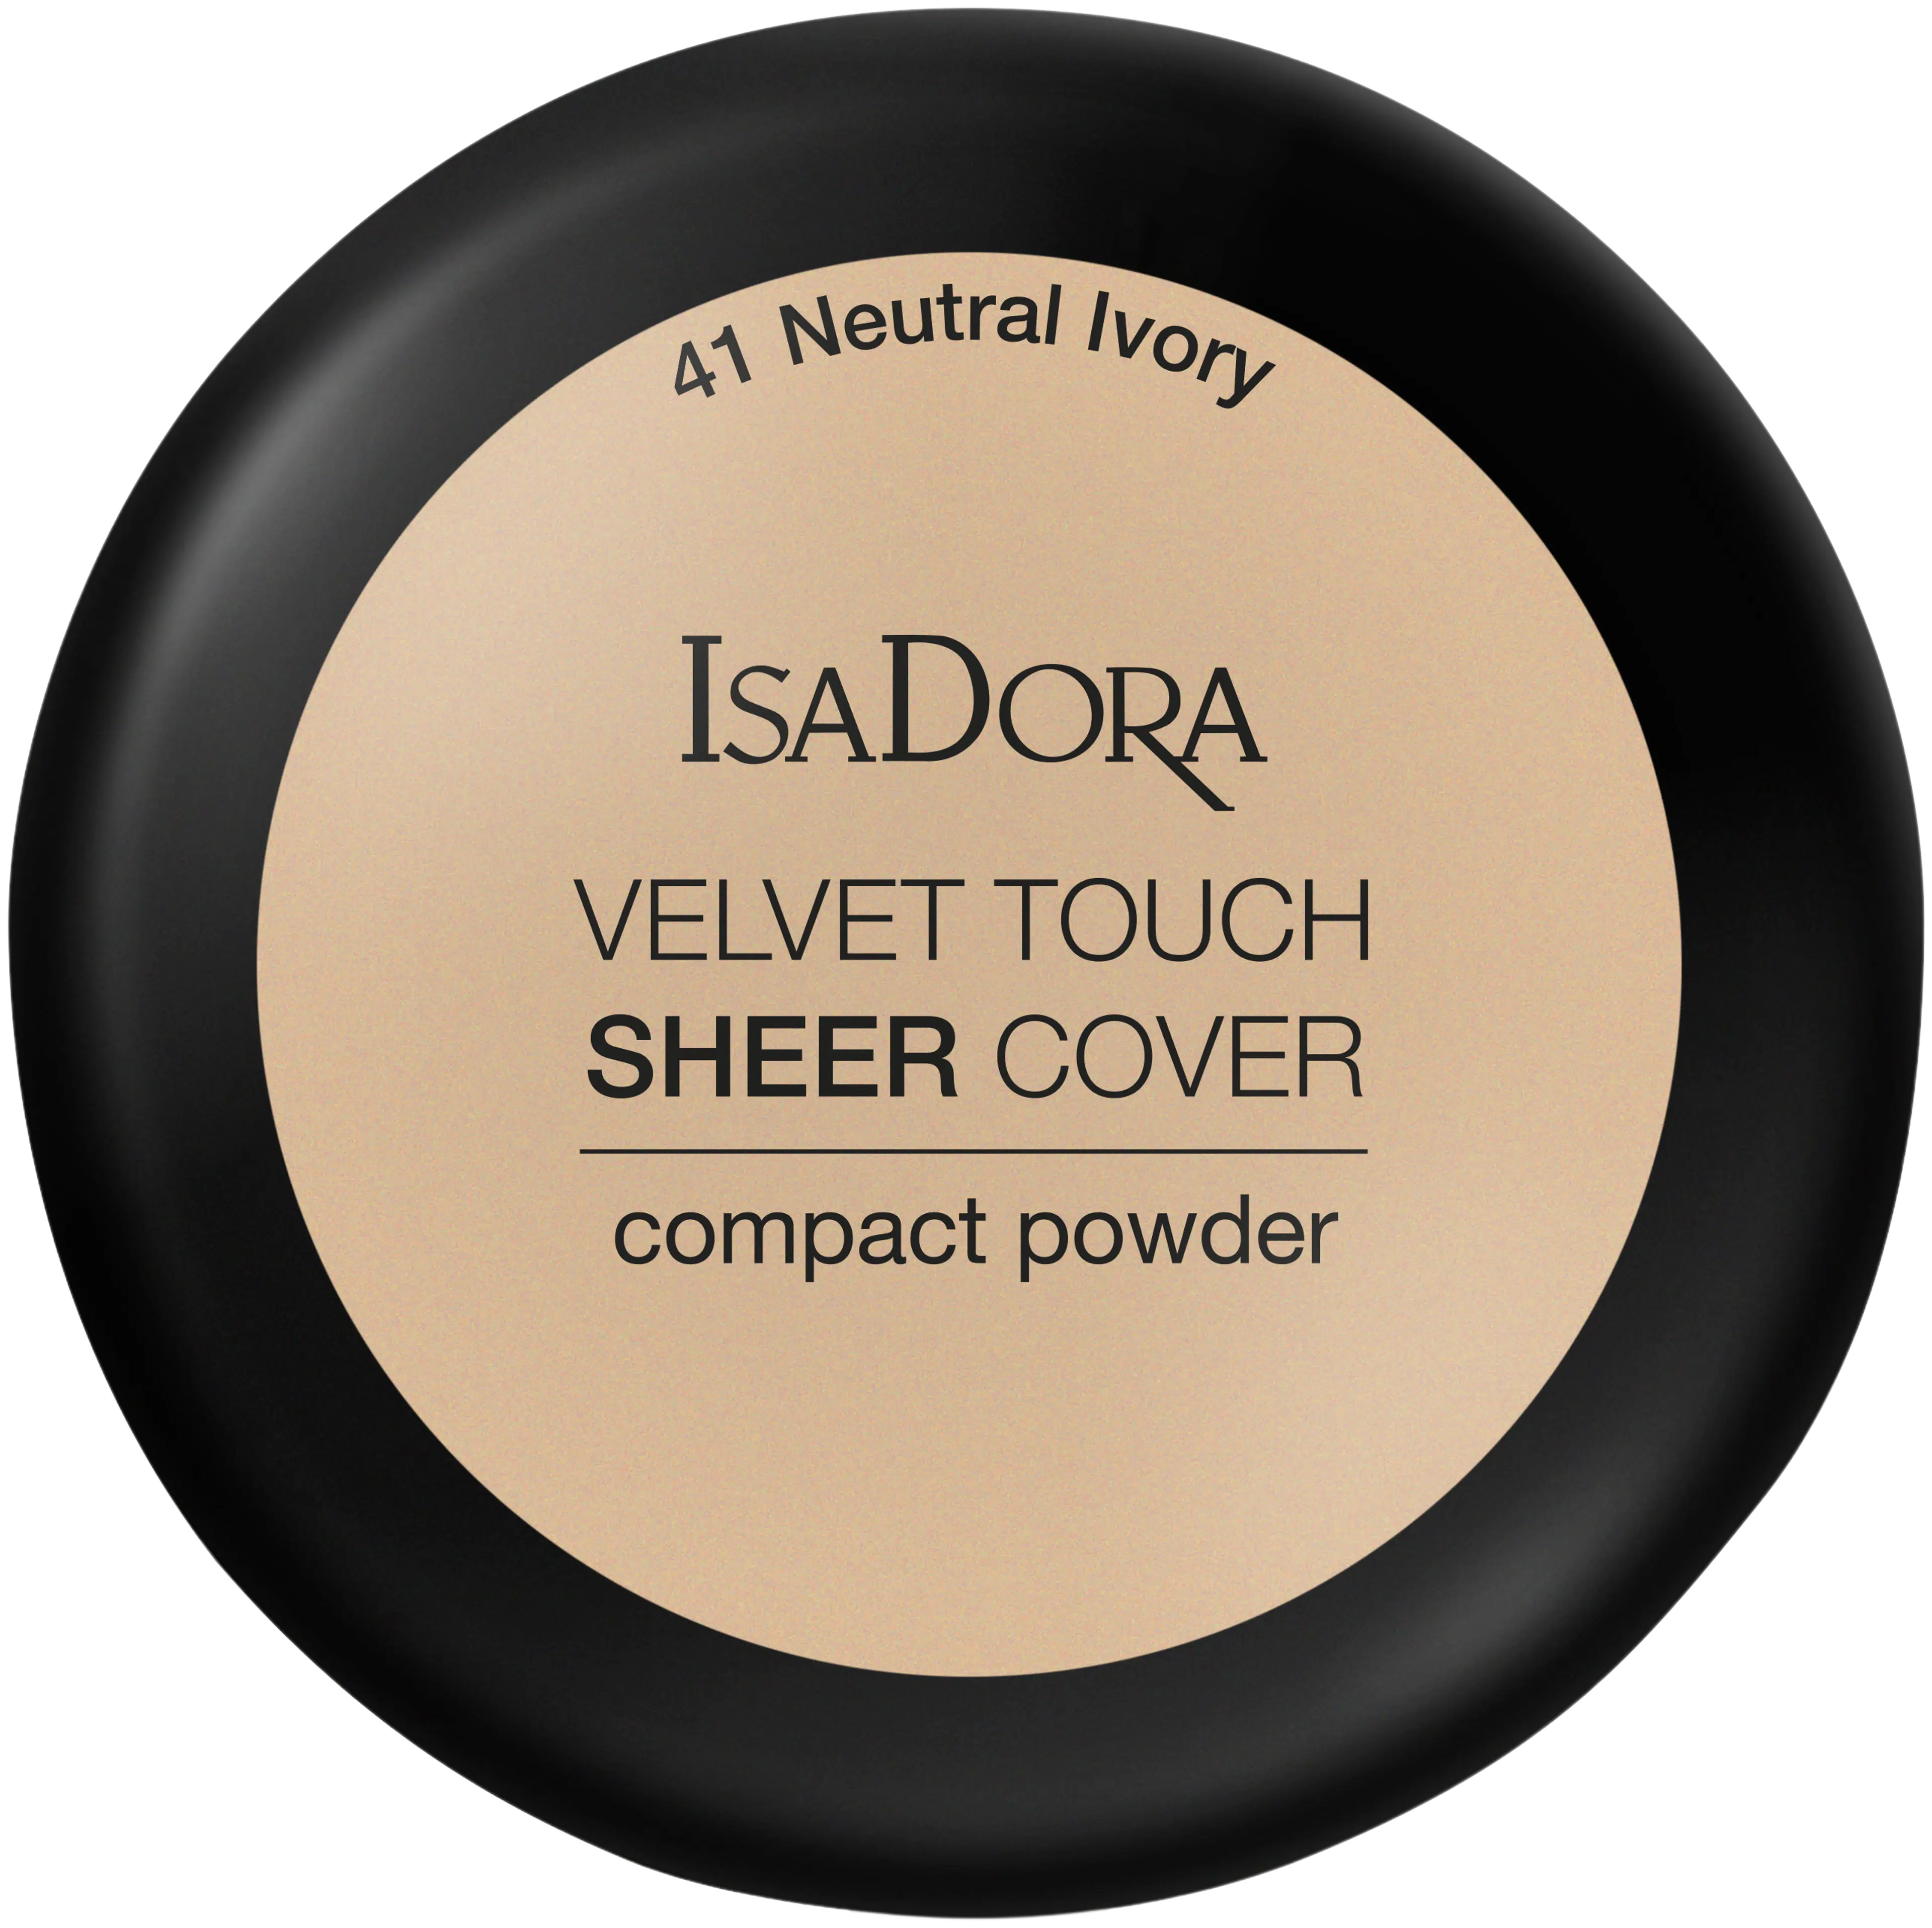 IsaDora Velvet Touch Sheer Cover Compact Powder 10 g 41 Neutral Ivory kivipuuteri